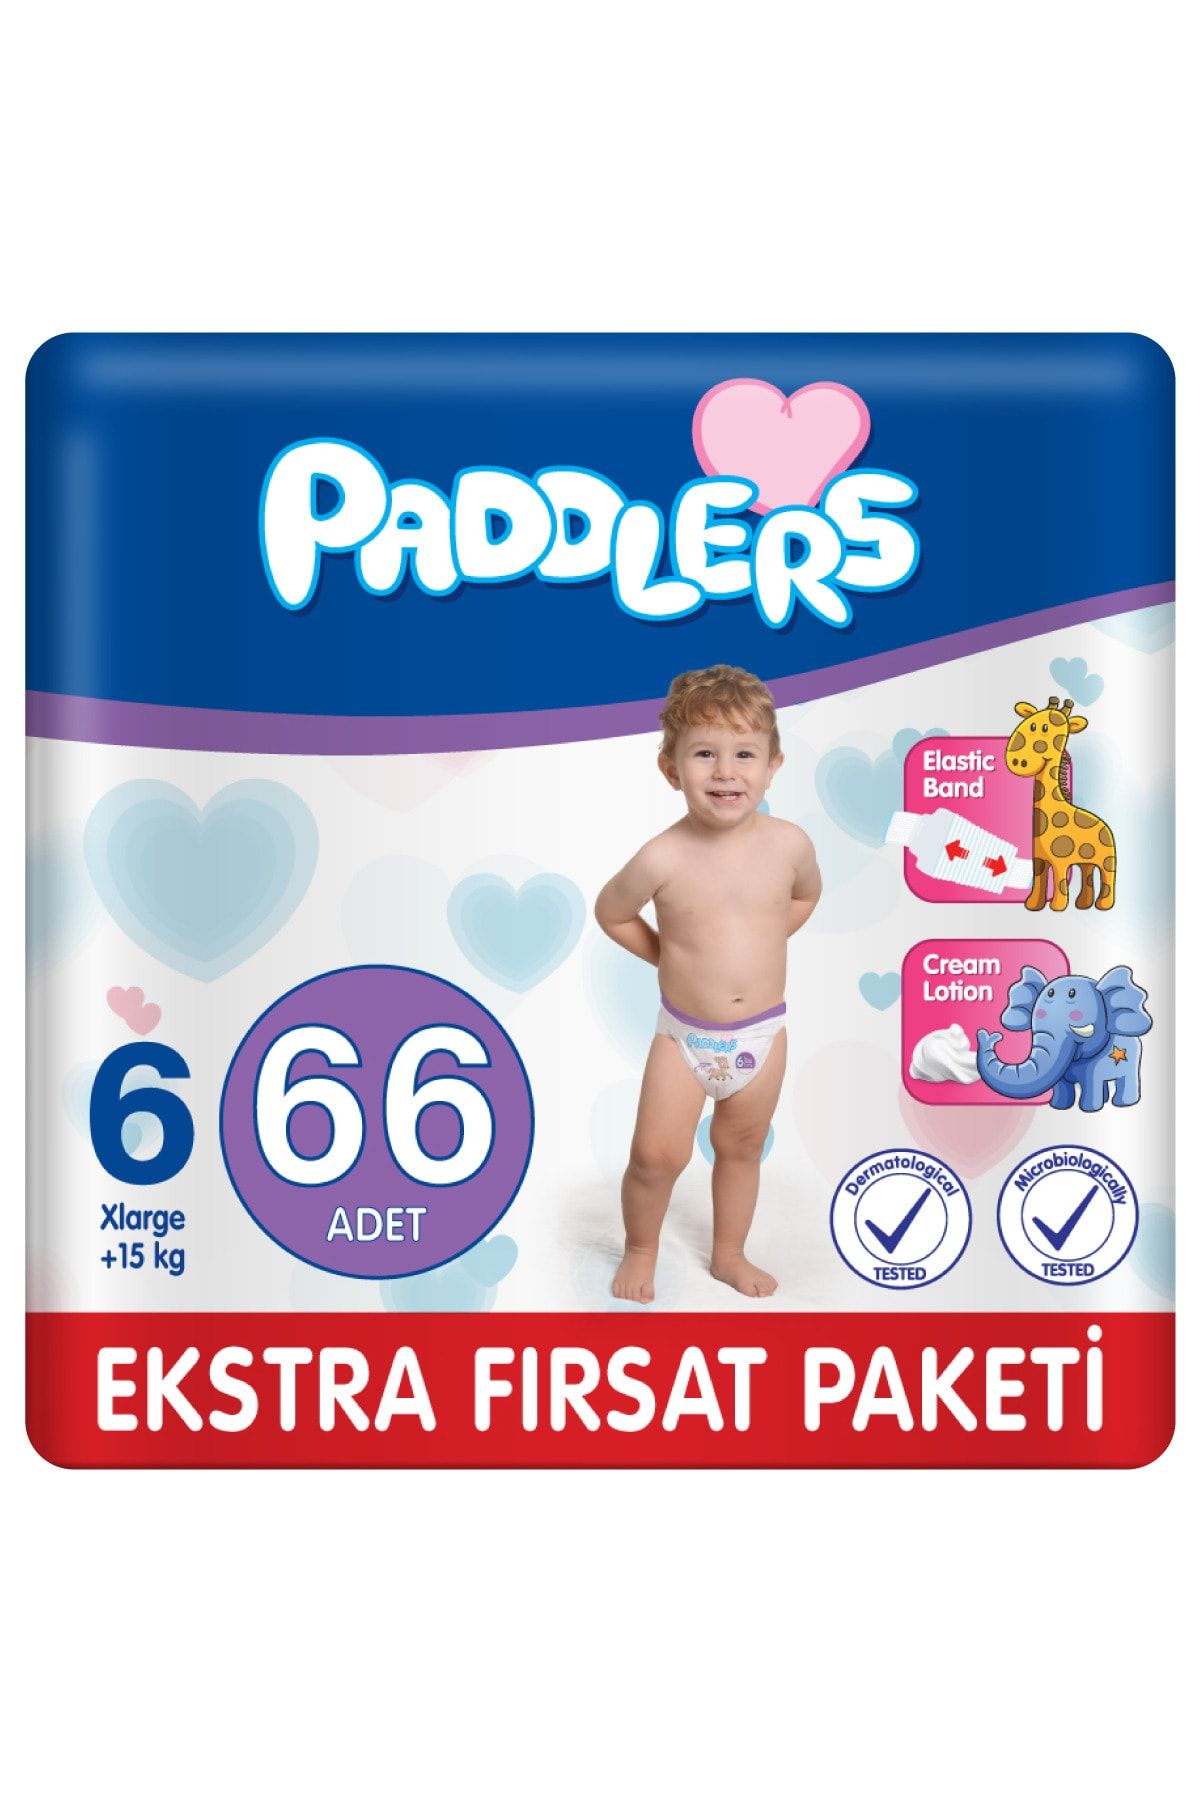 Paddlers Bebek Bezi 6 Numara X-large 66 Adet (15+kg) Ekstra Fırsat Paketi